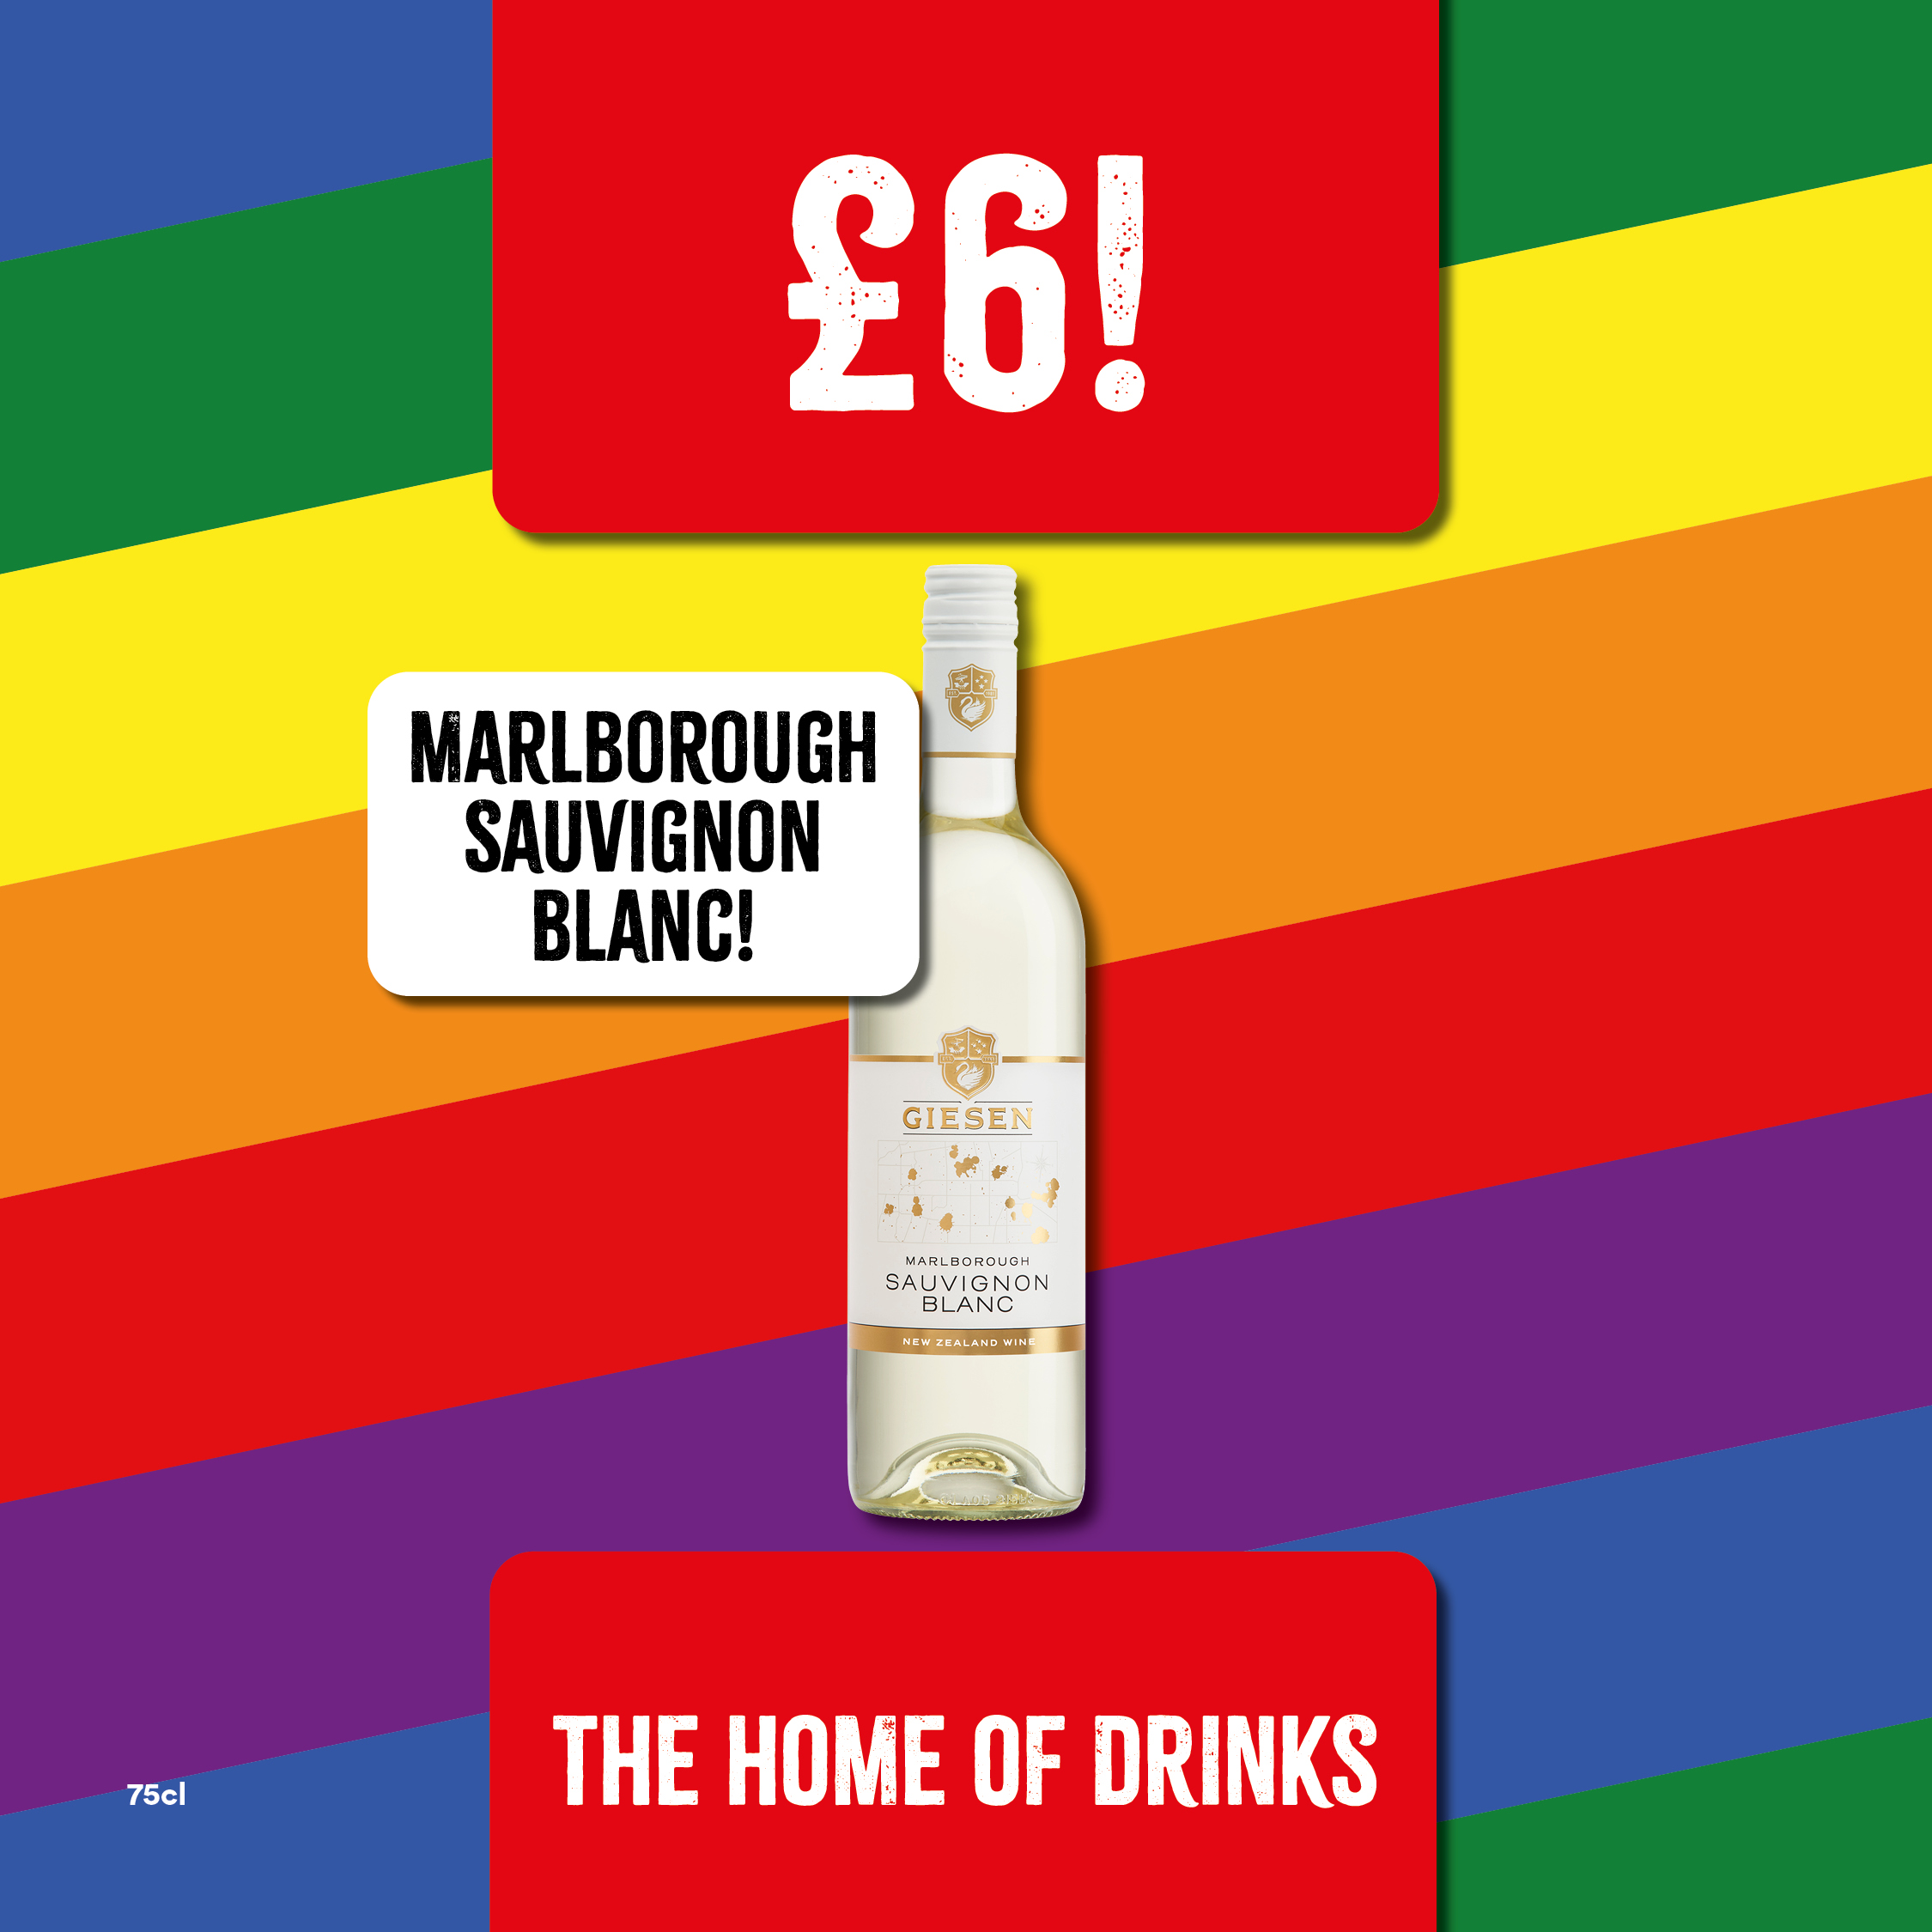 Only £6 Marlborough Sauvignon Blanc Bargain Booze Select Convenience Urmston 01617 497885